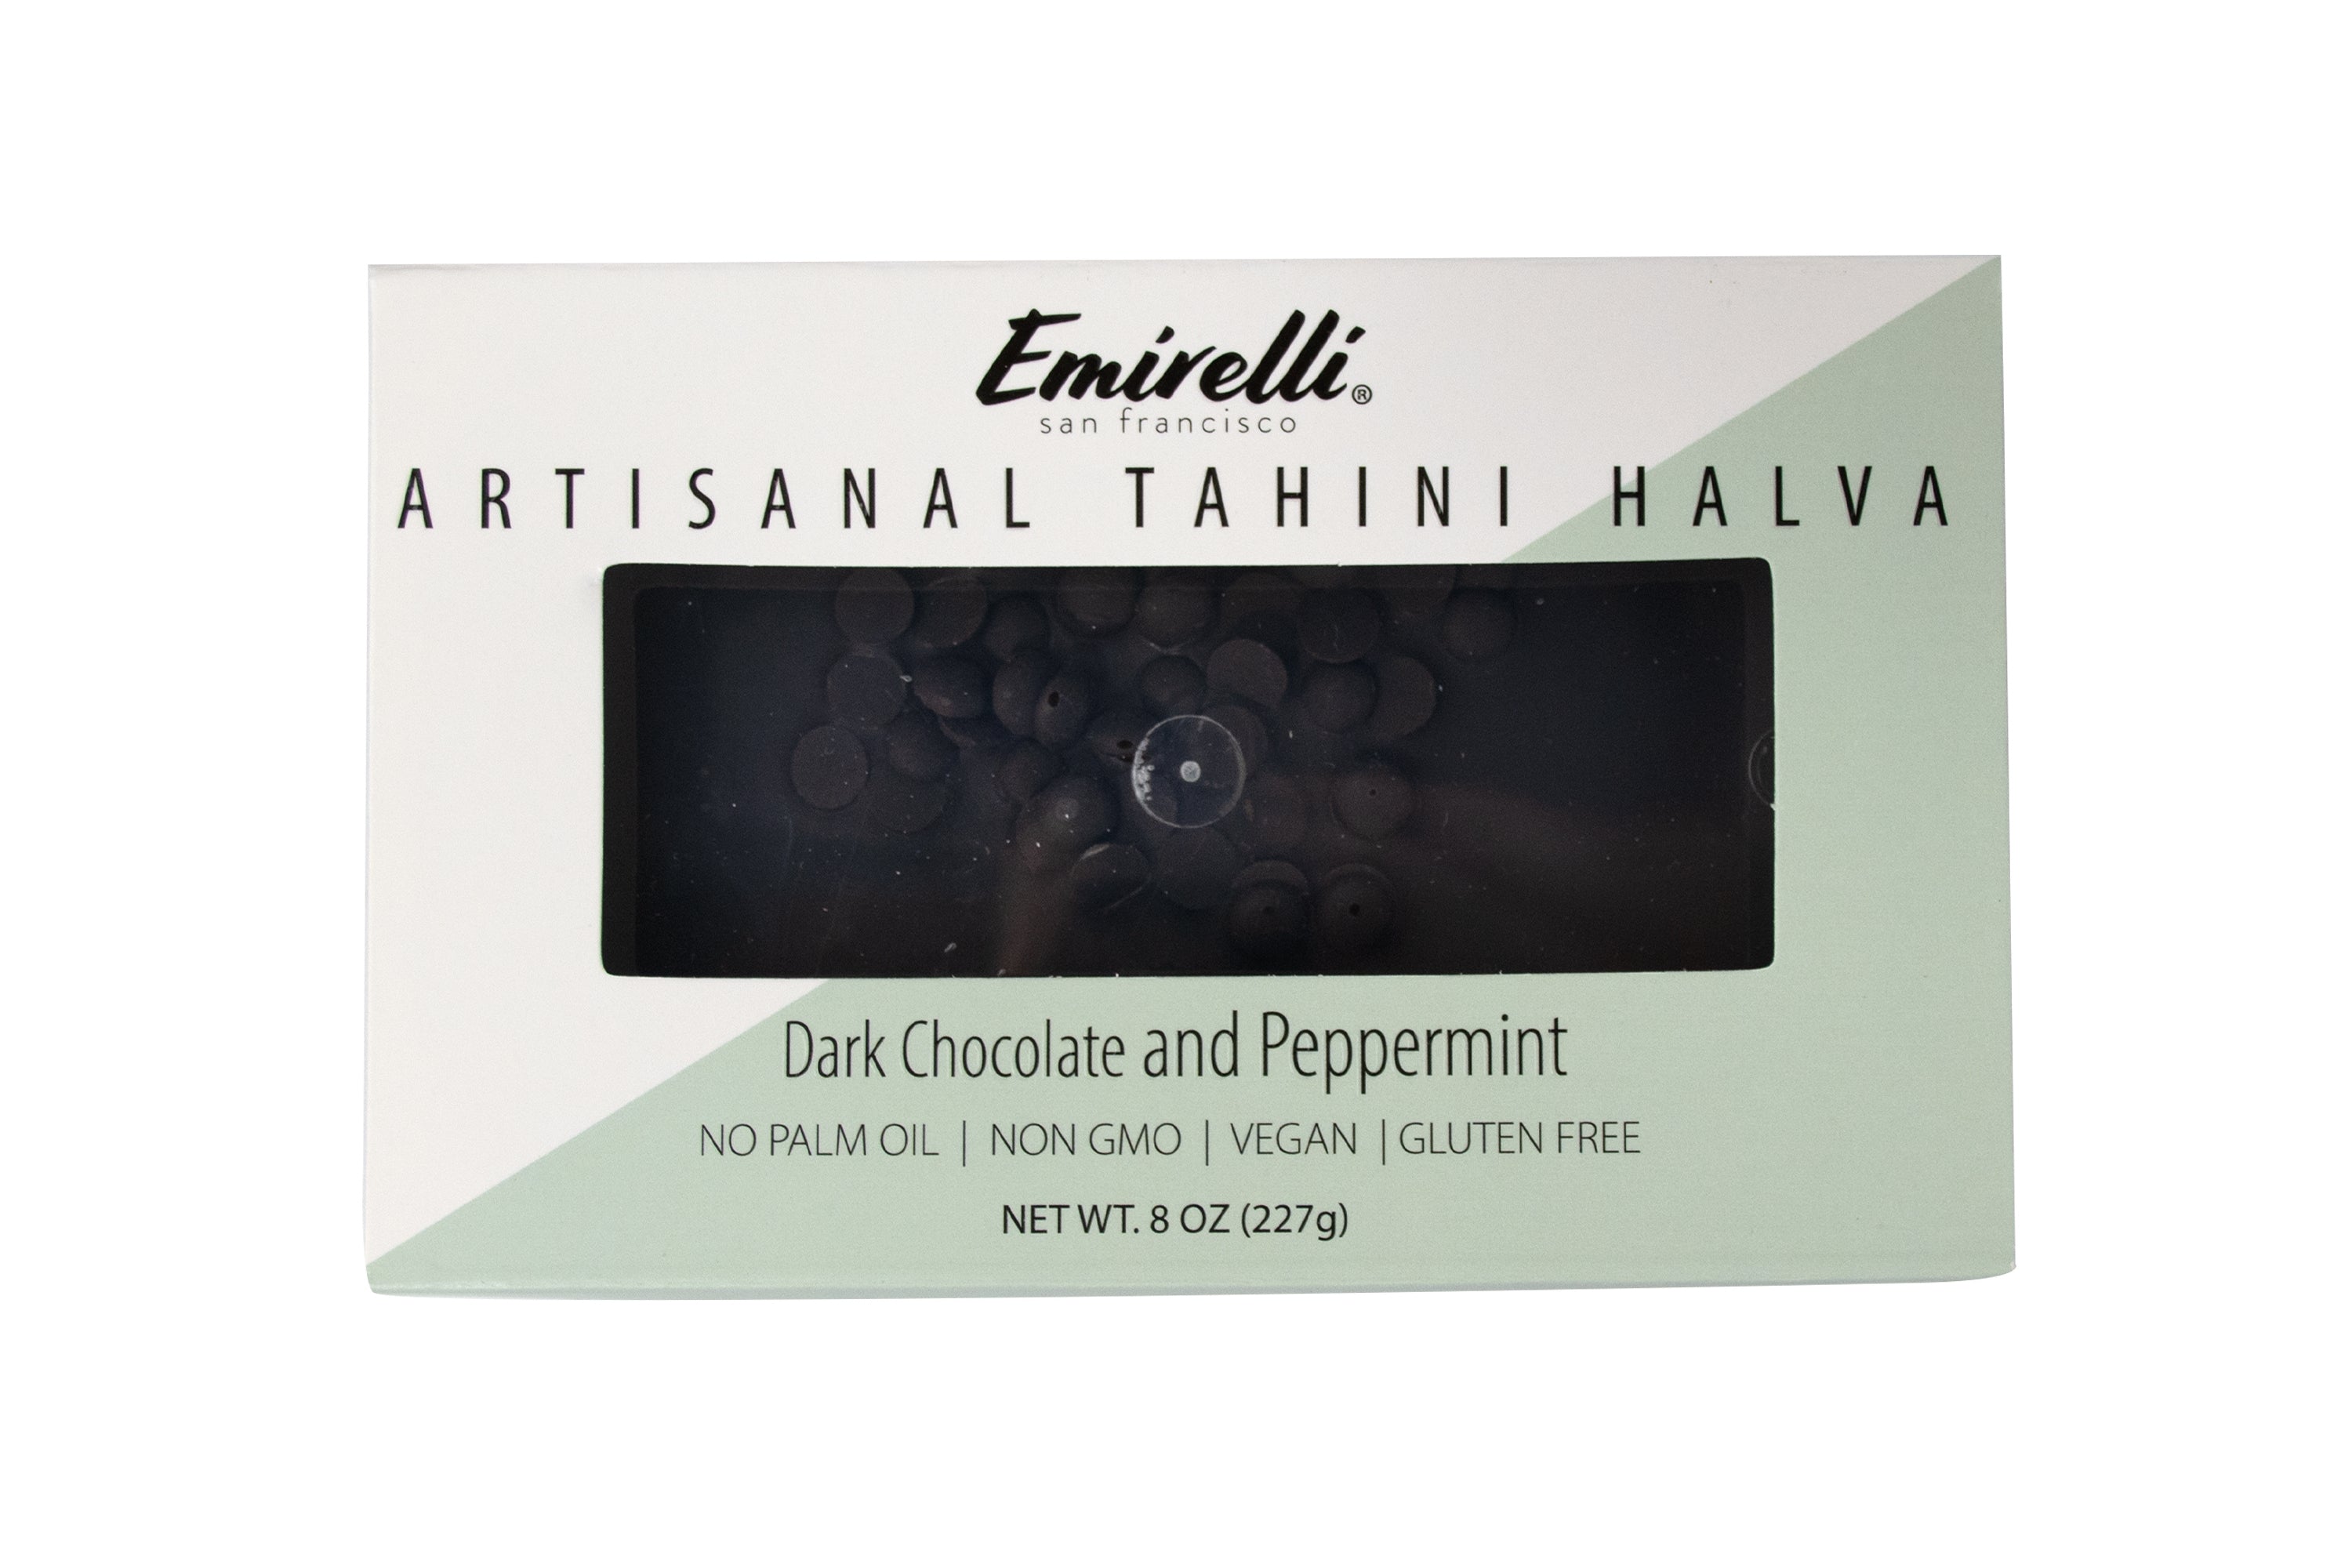 Emirelli Artisanal Tahini Halva Dessert - Dark Chocolate and Peppermint